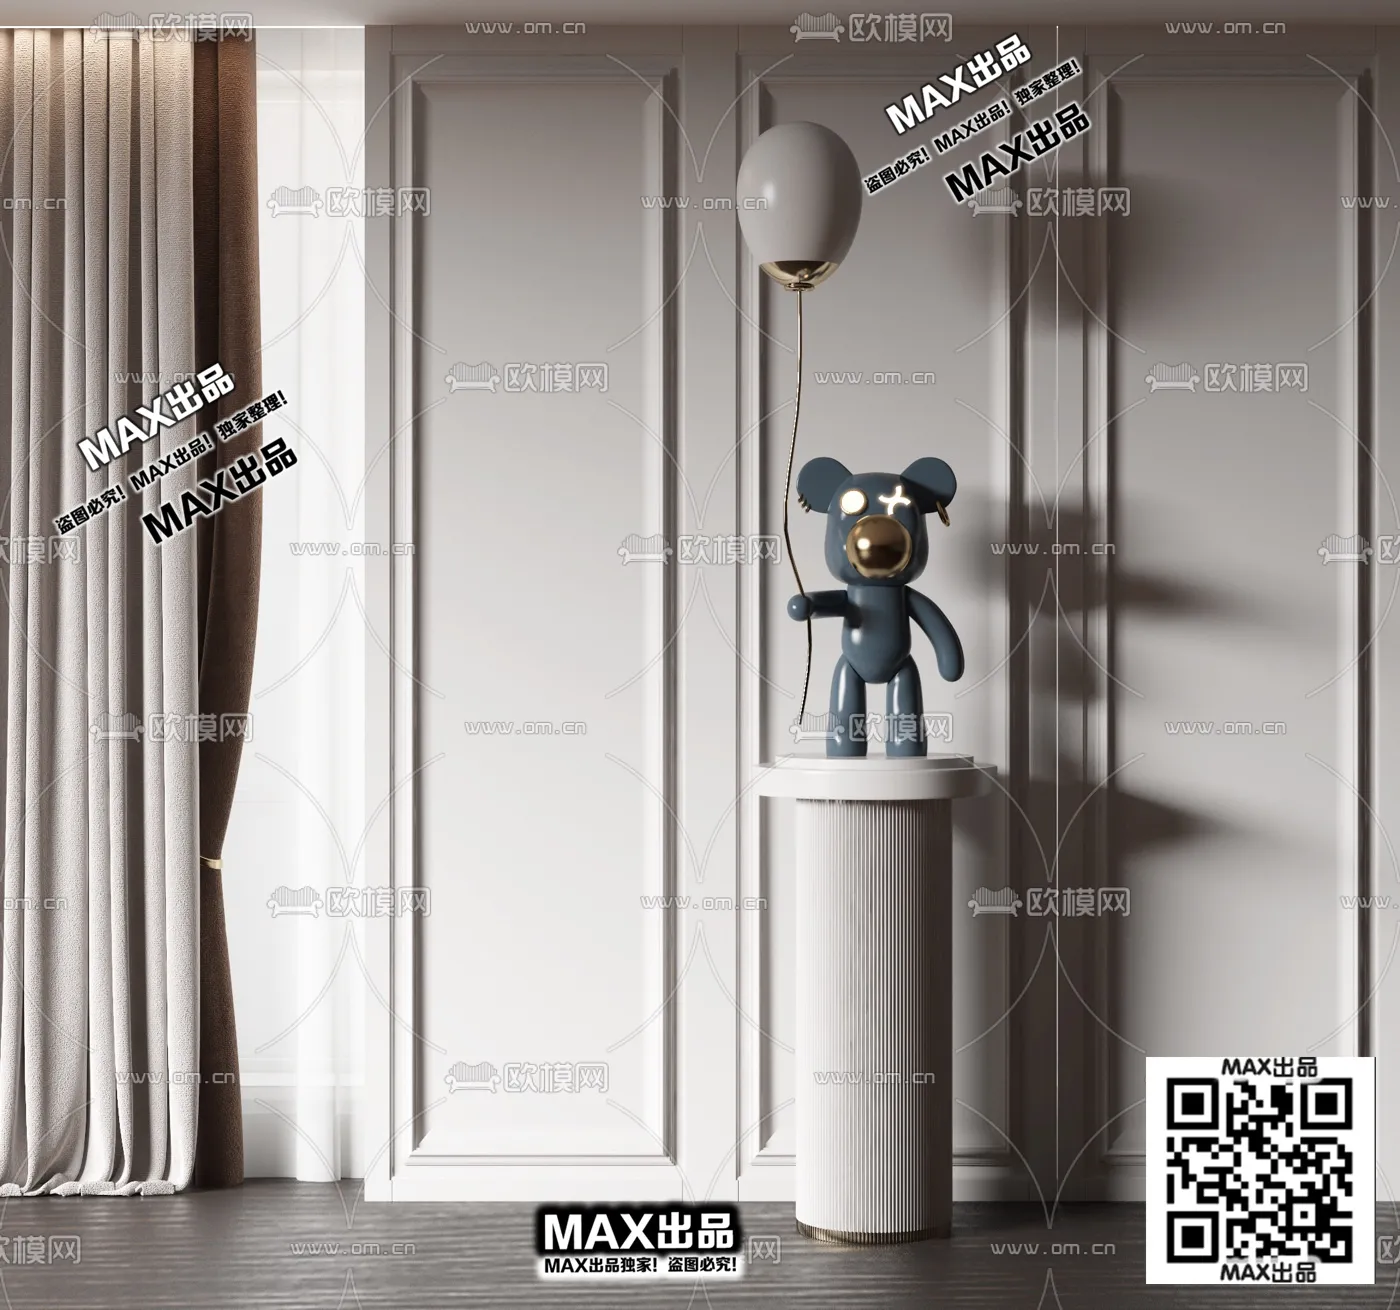 DECORATION 3D MODELS – 3DS MAX – 012